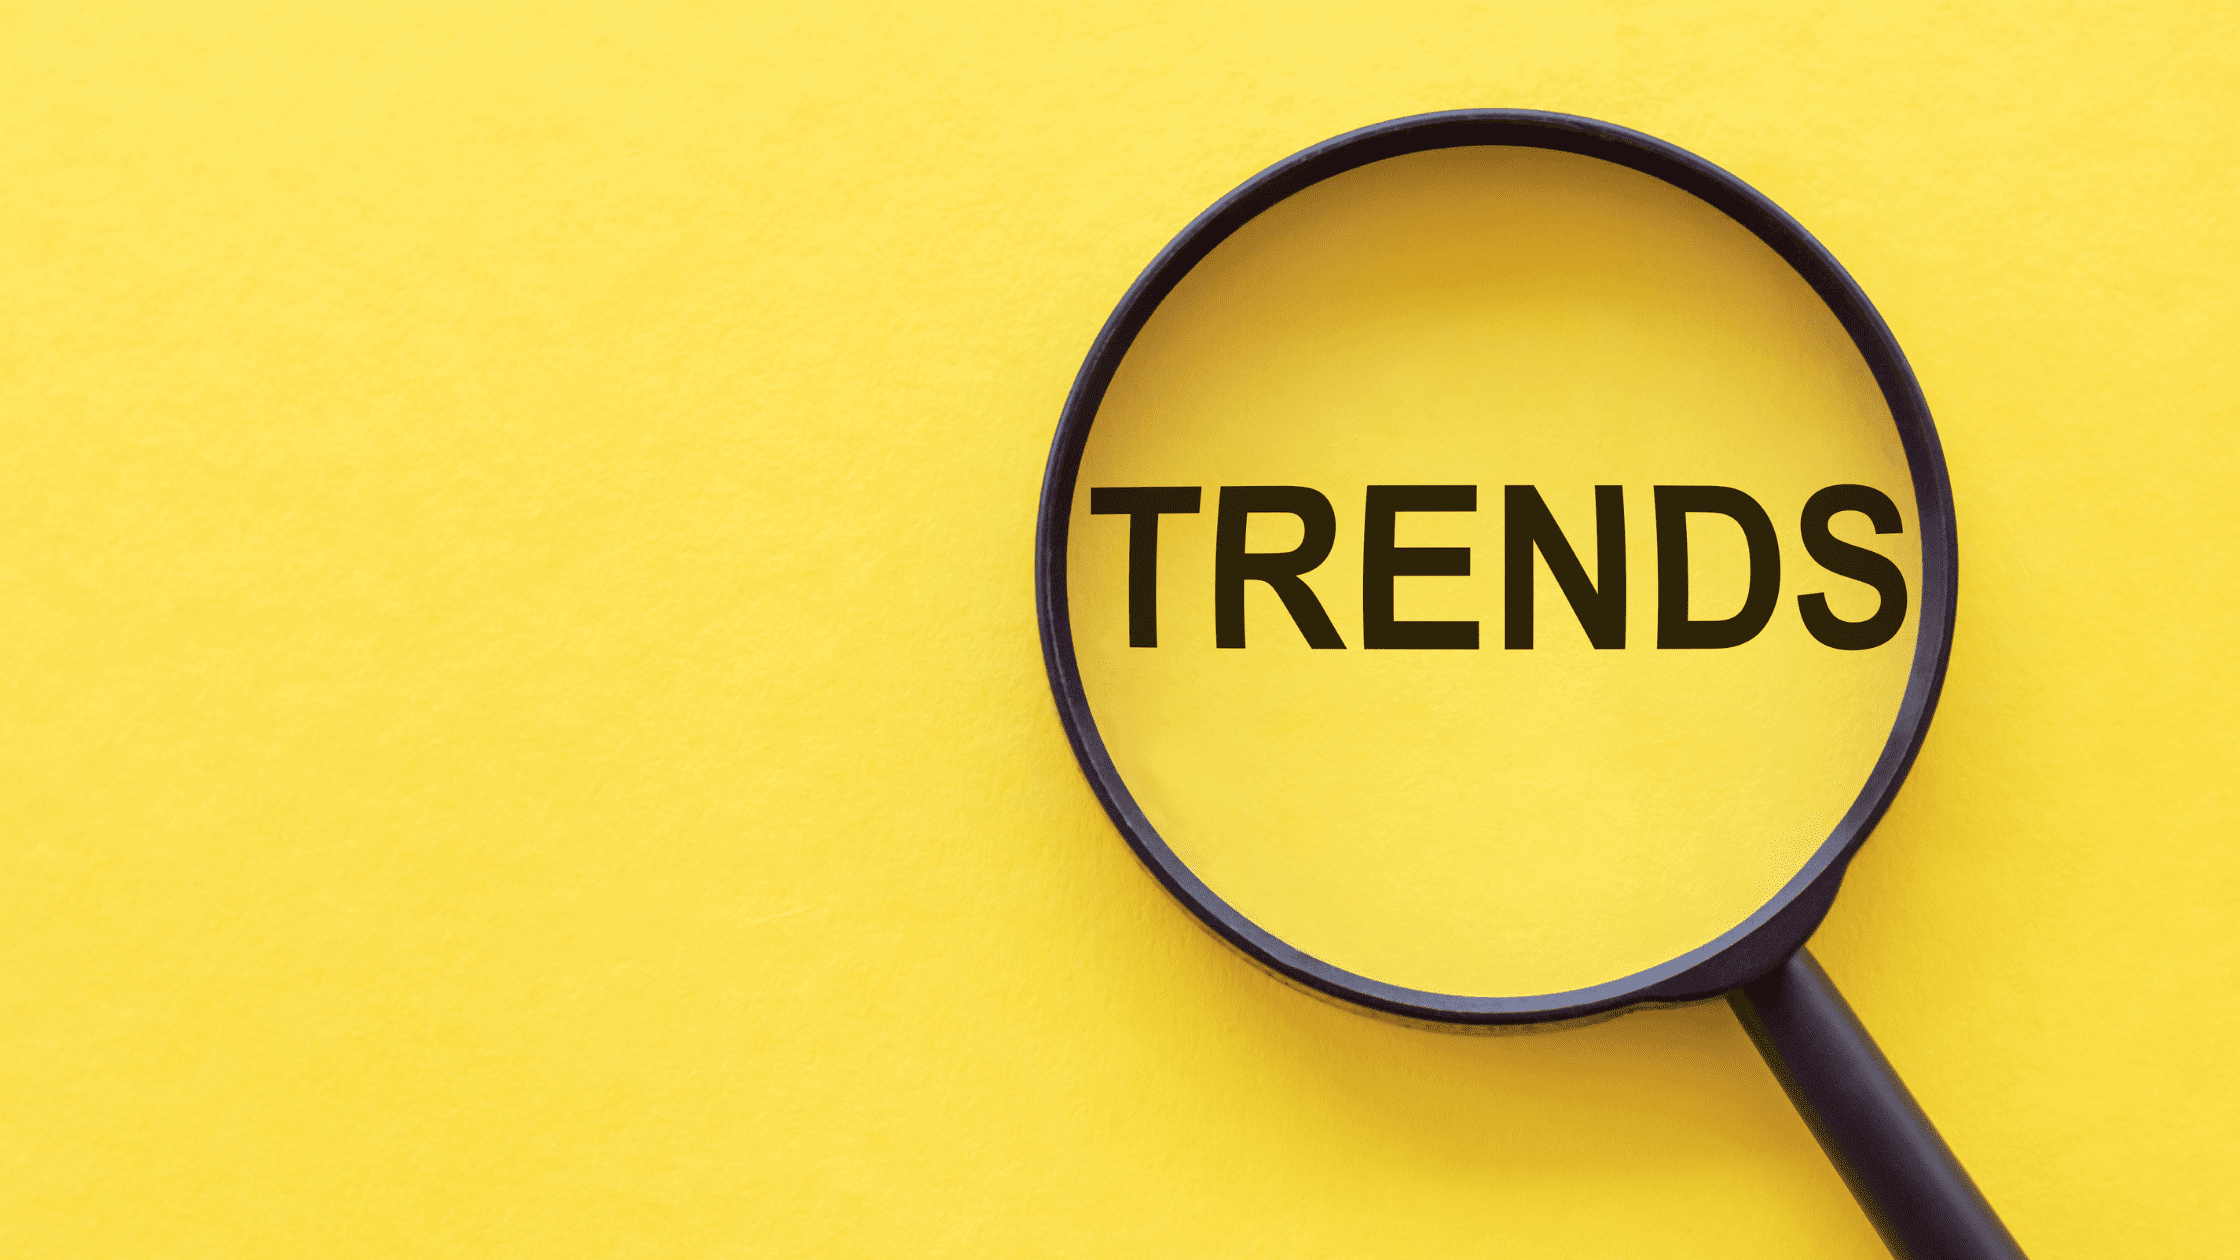 Trends written under a magnifying glass